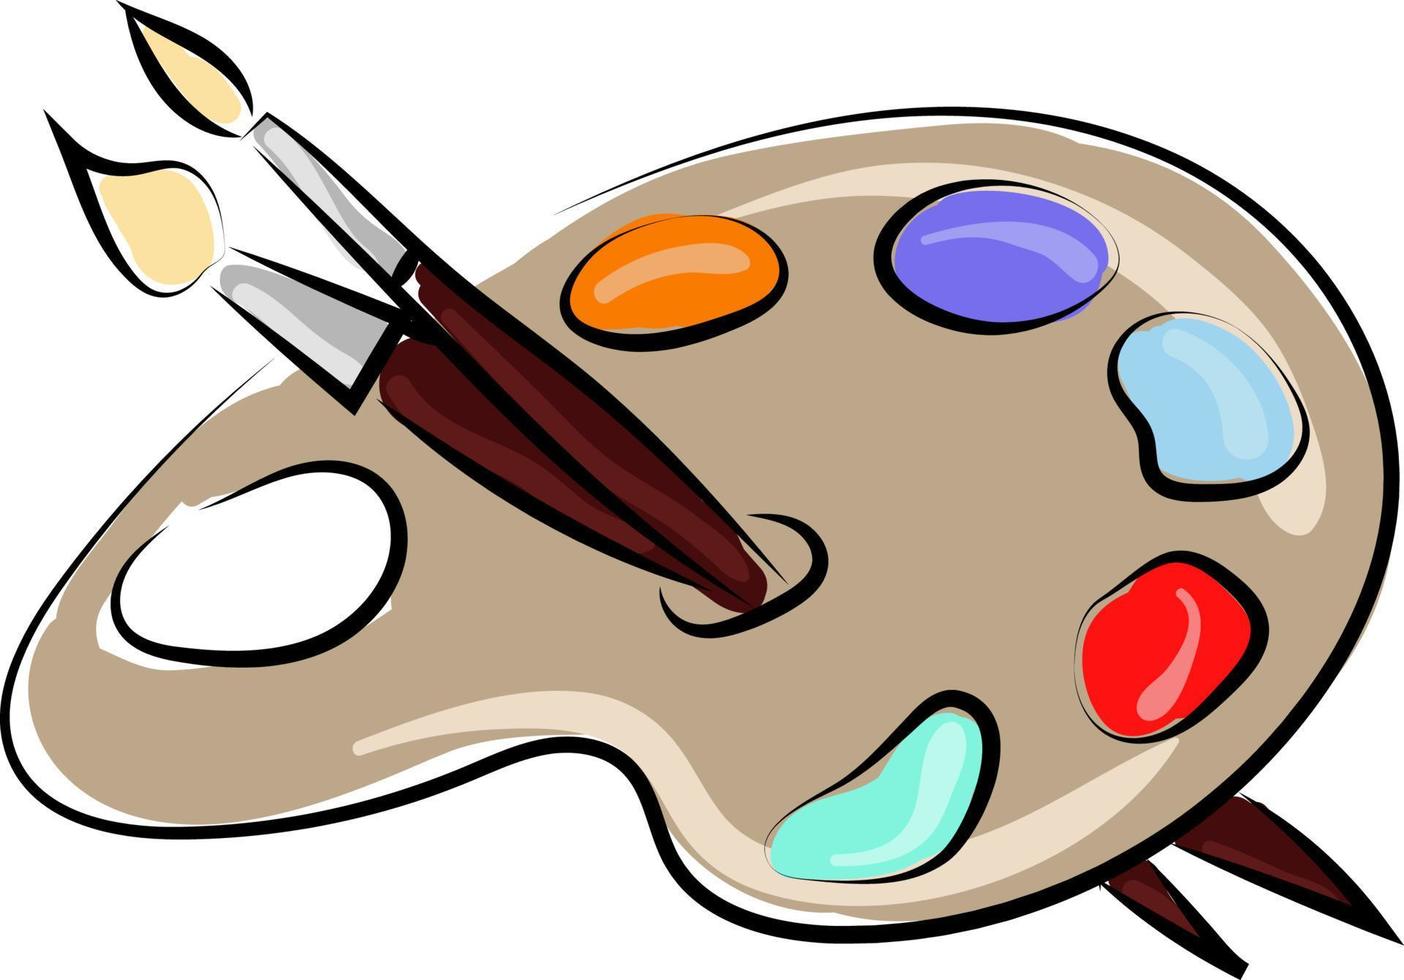 paleta de colores con pinceles, ilustración, vector sobre fondo blanco